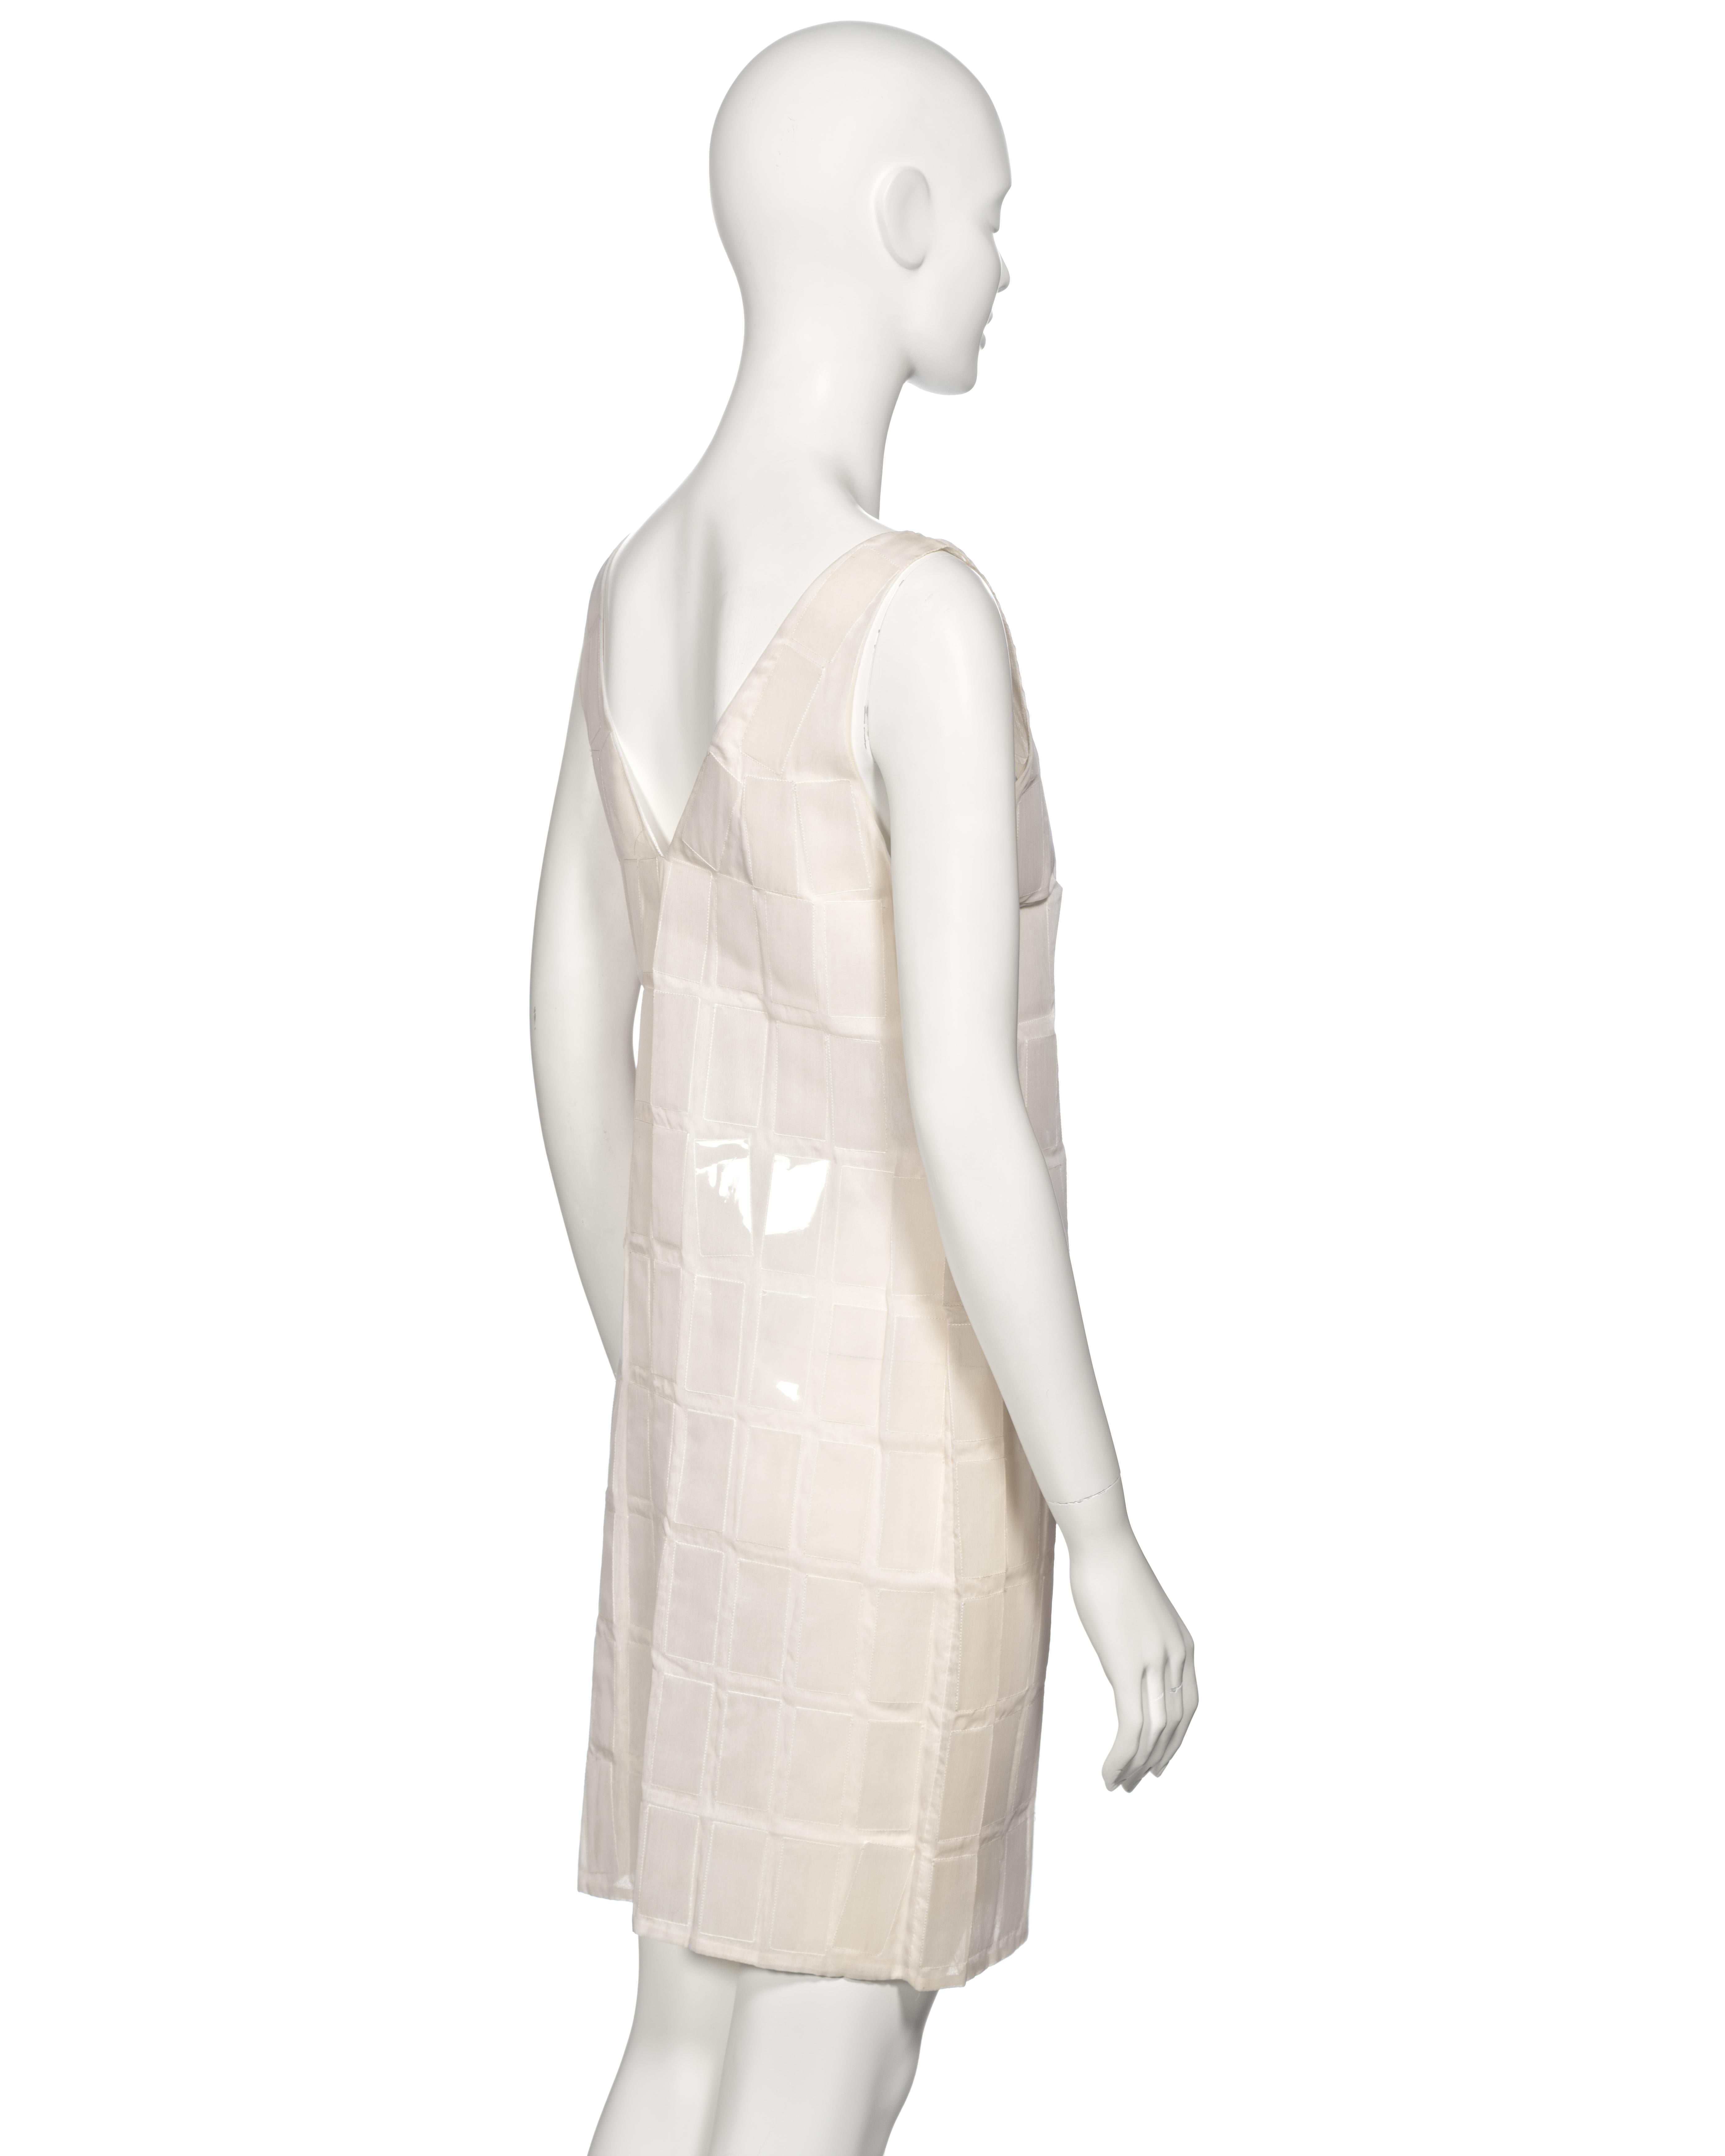 Prada by Miuccia Prada White Silk and Plastic Tile Shift Dress, fw 1998 For Sale 6